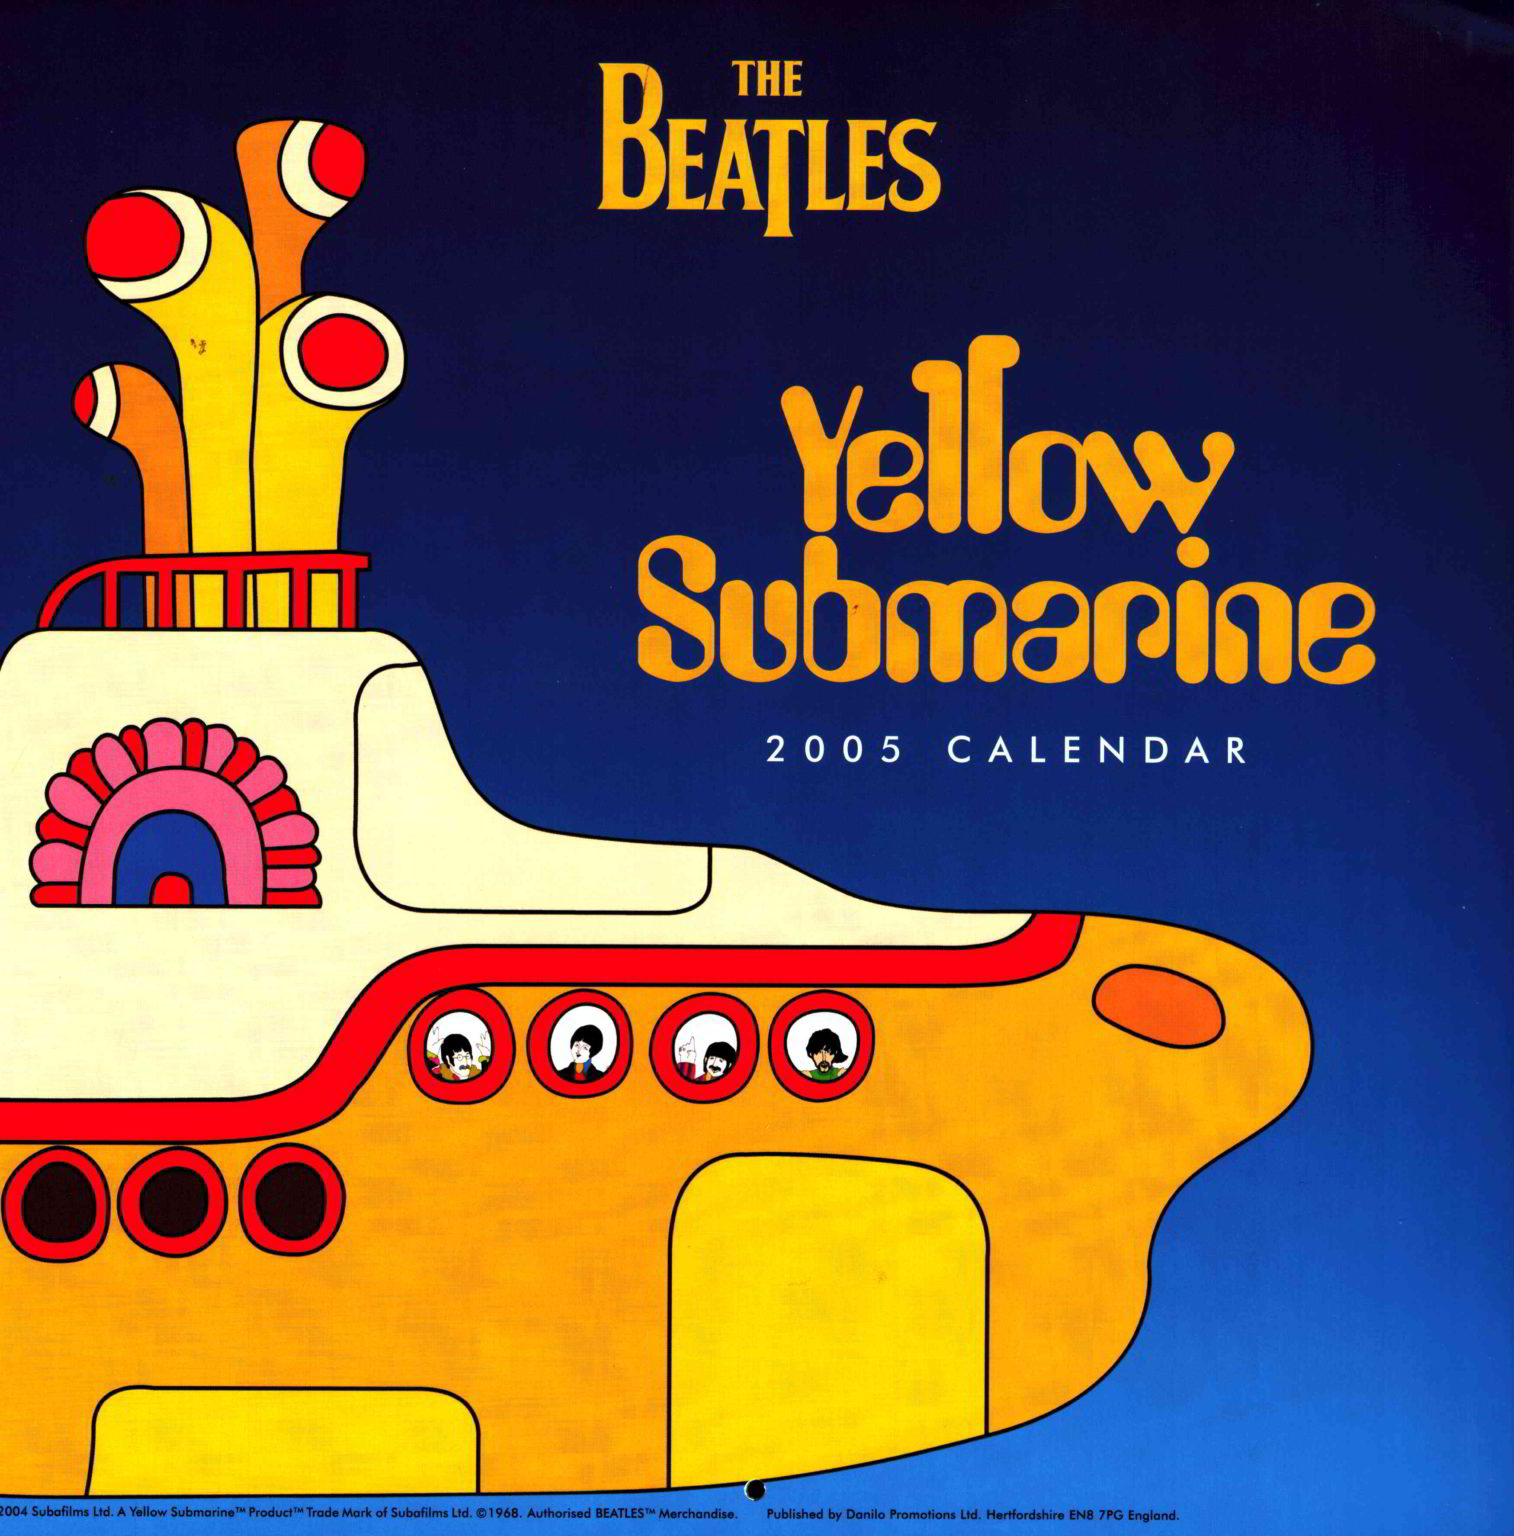 THE BEATLES YELLOW SUBMARINE CALENDAR 2005 Beatles Museum